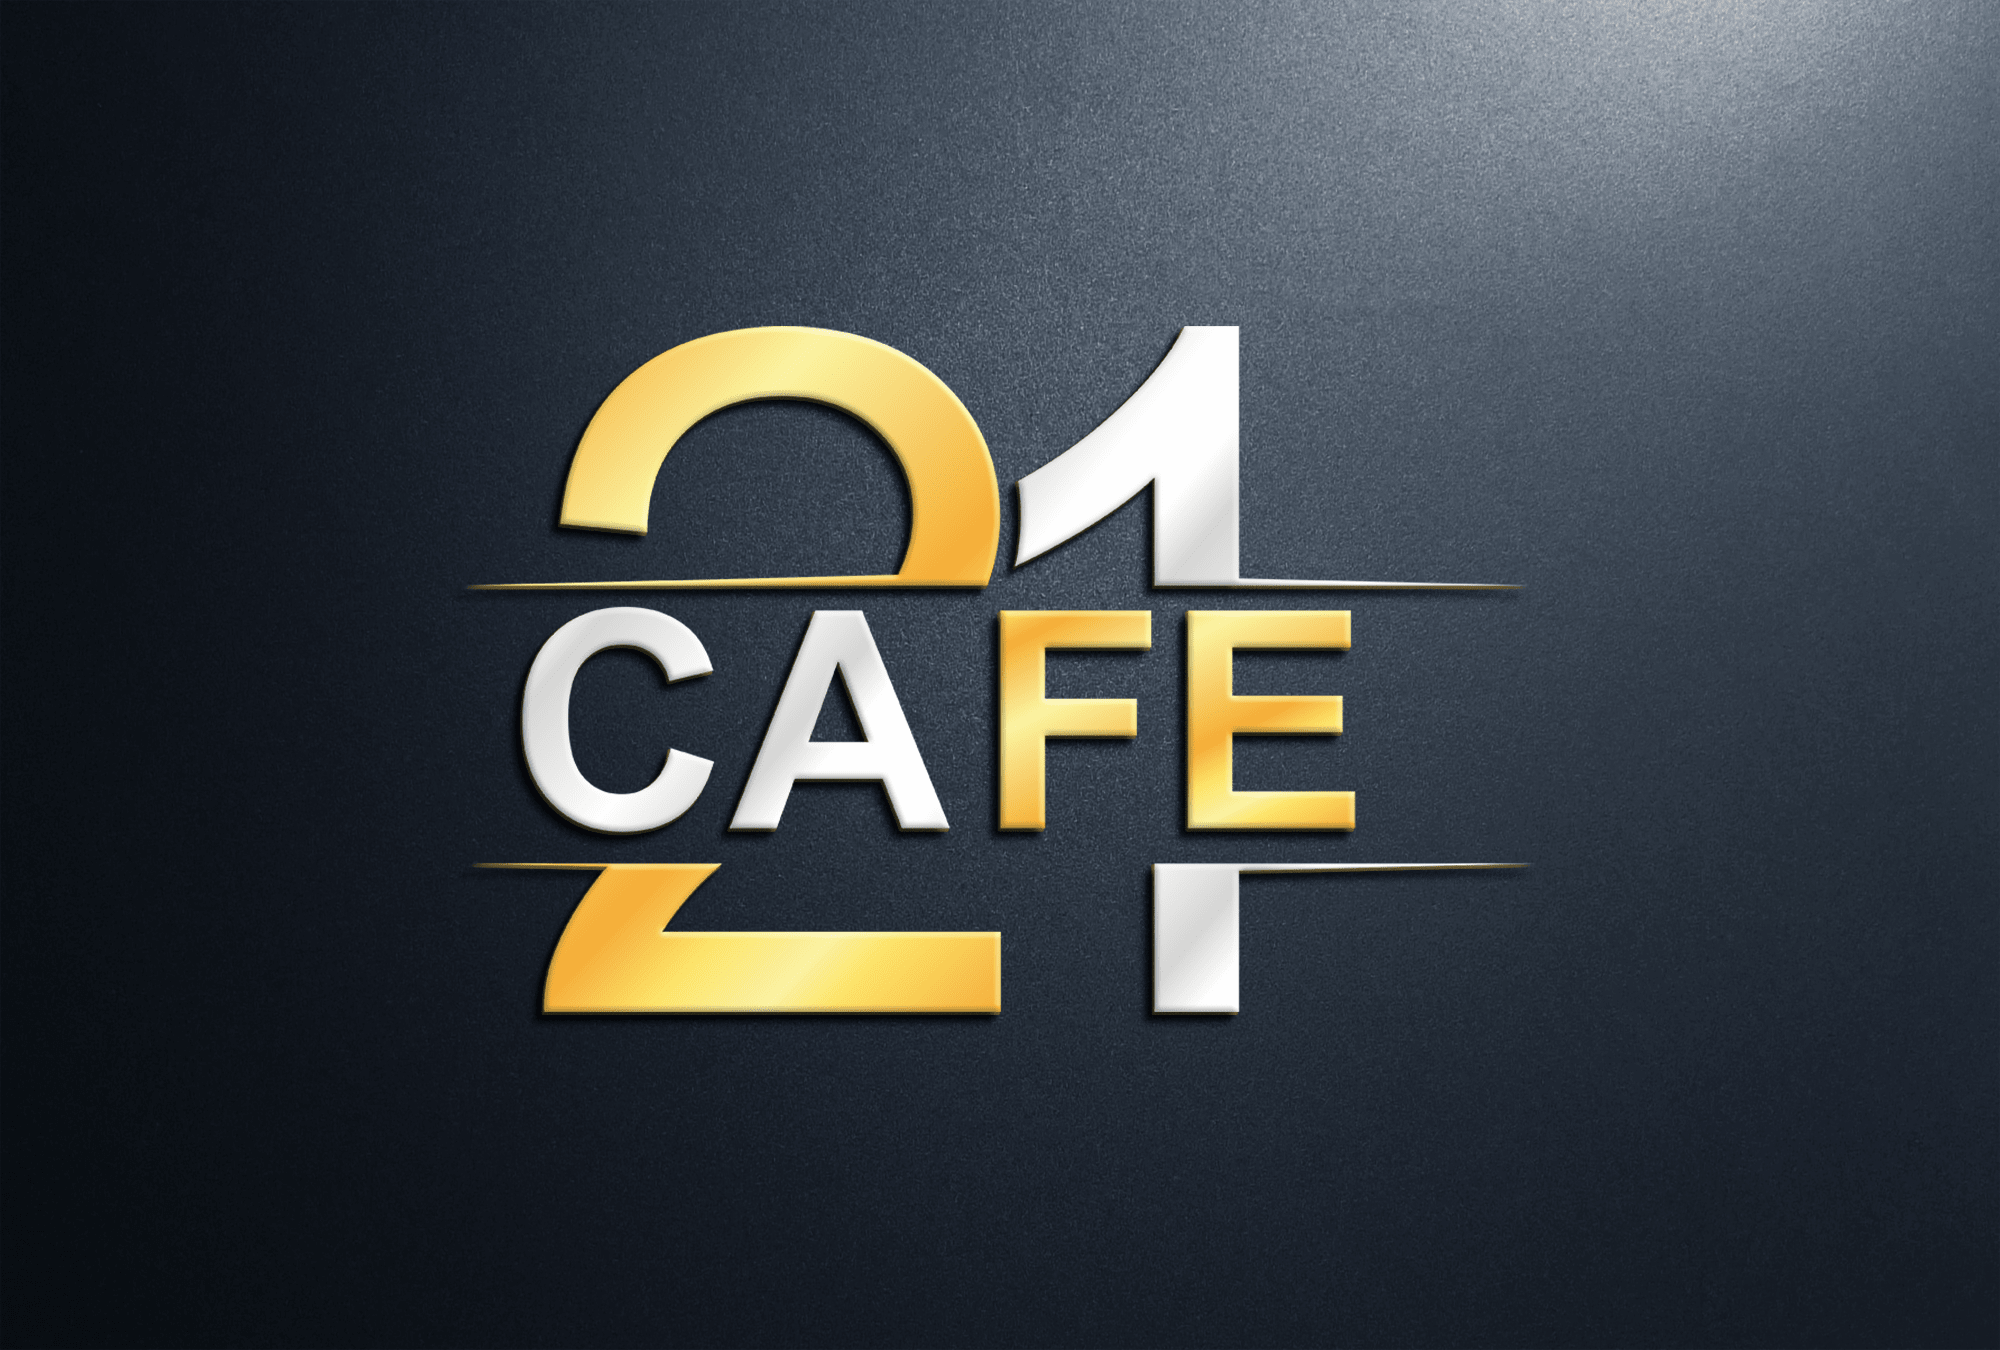 21 Cafe